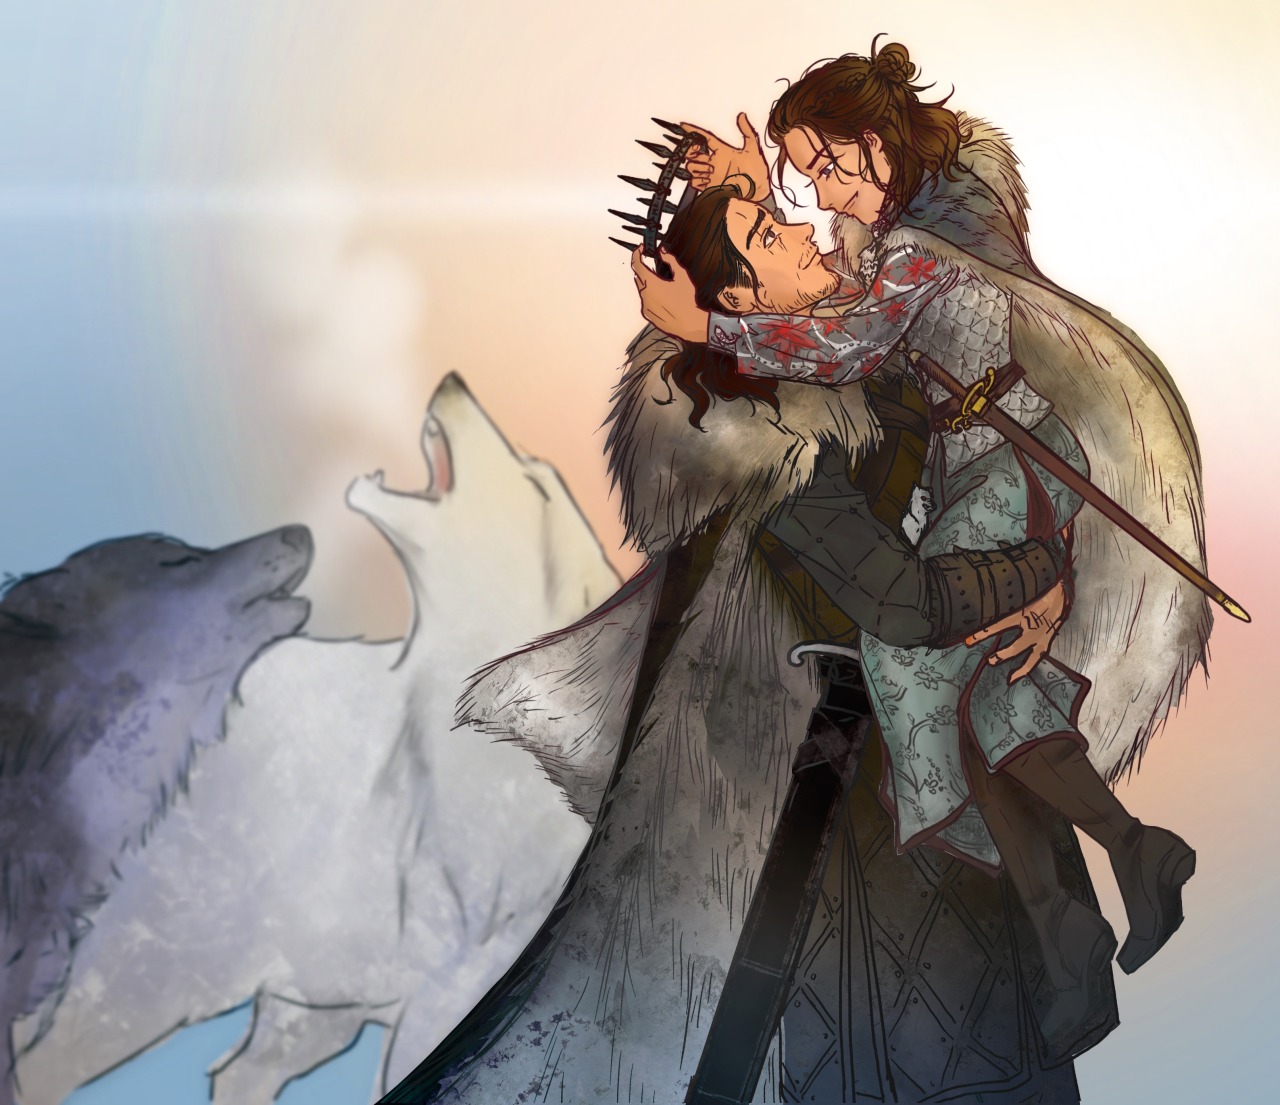 Jon and Arya reunites at Winterfell.